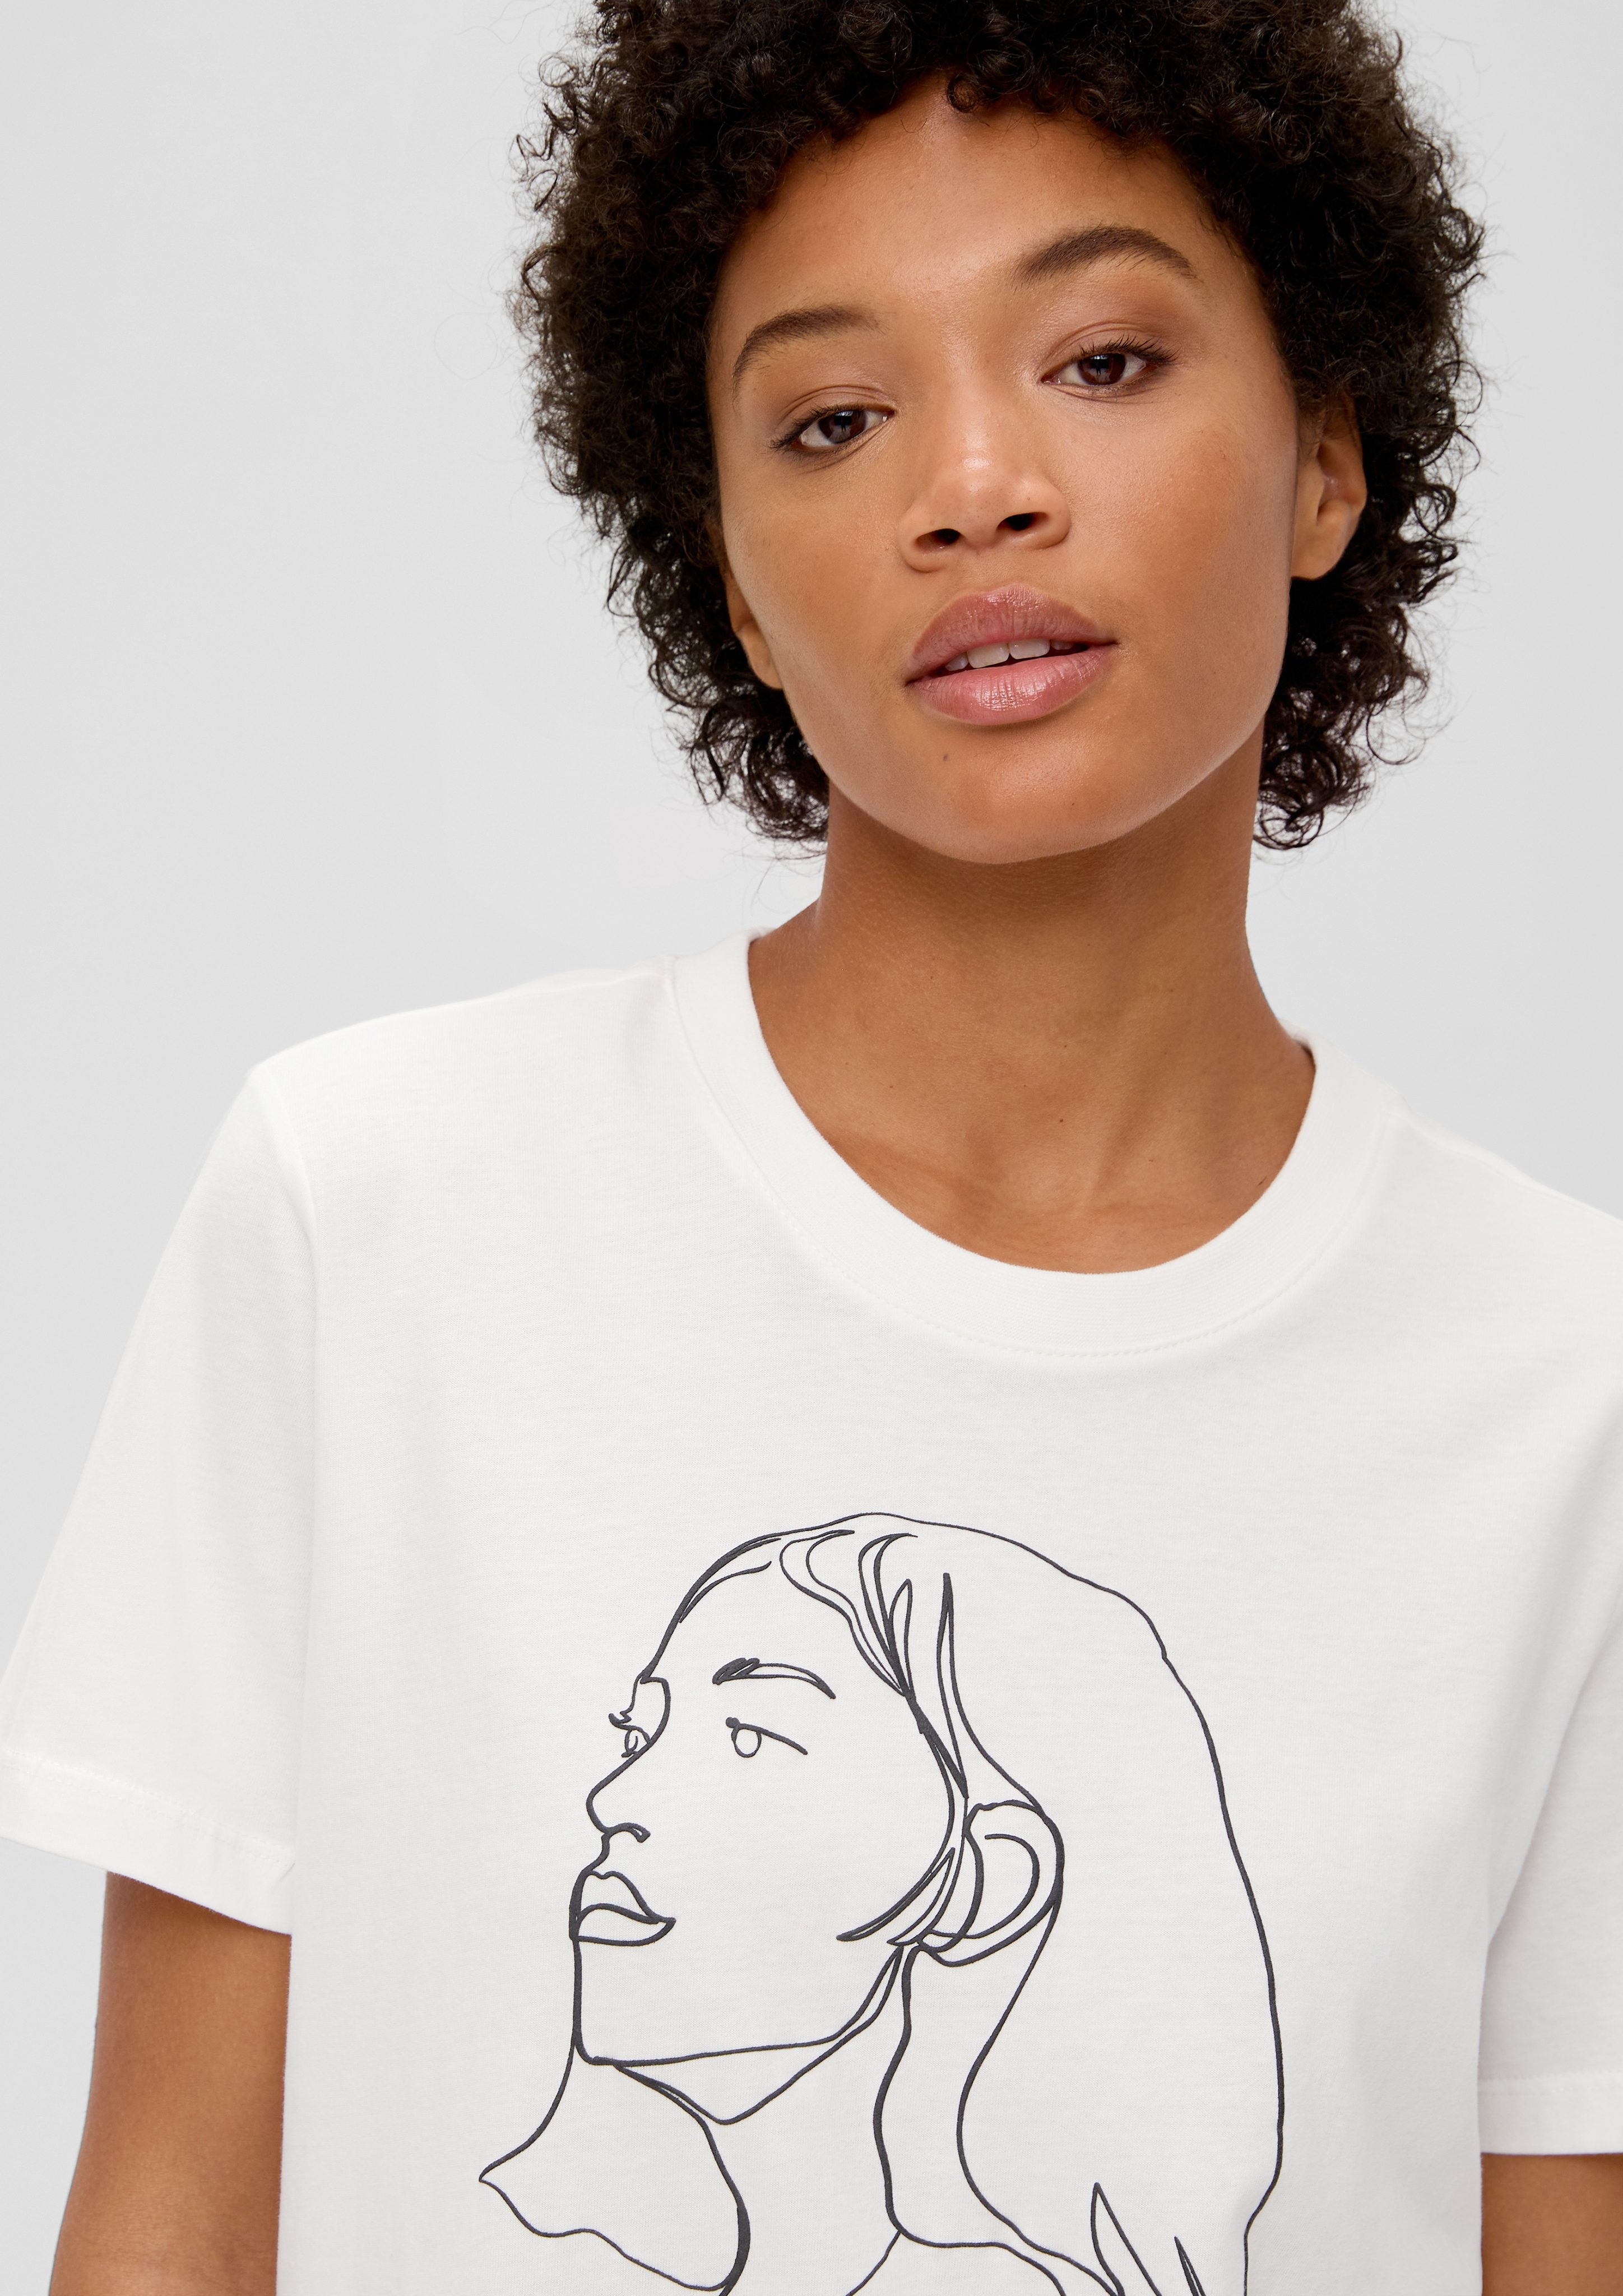 T-Shirt s.Oliver Artwork, ecru Baumwolle Kurzarmshirt Logo aus